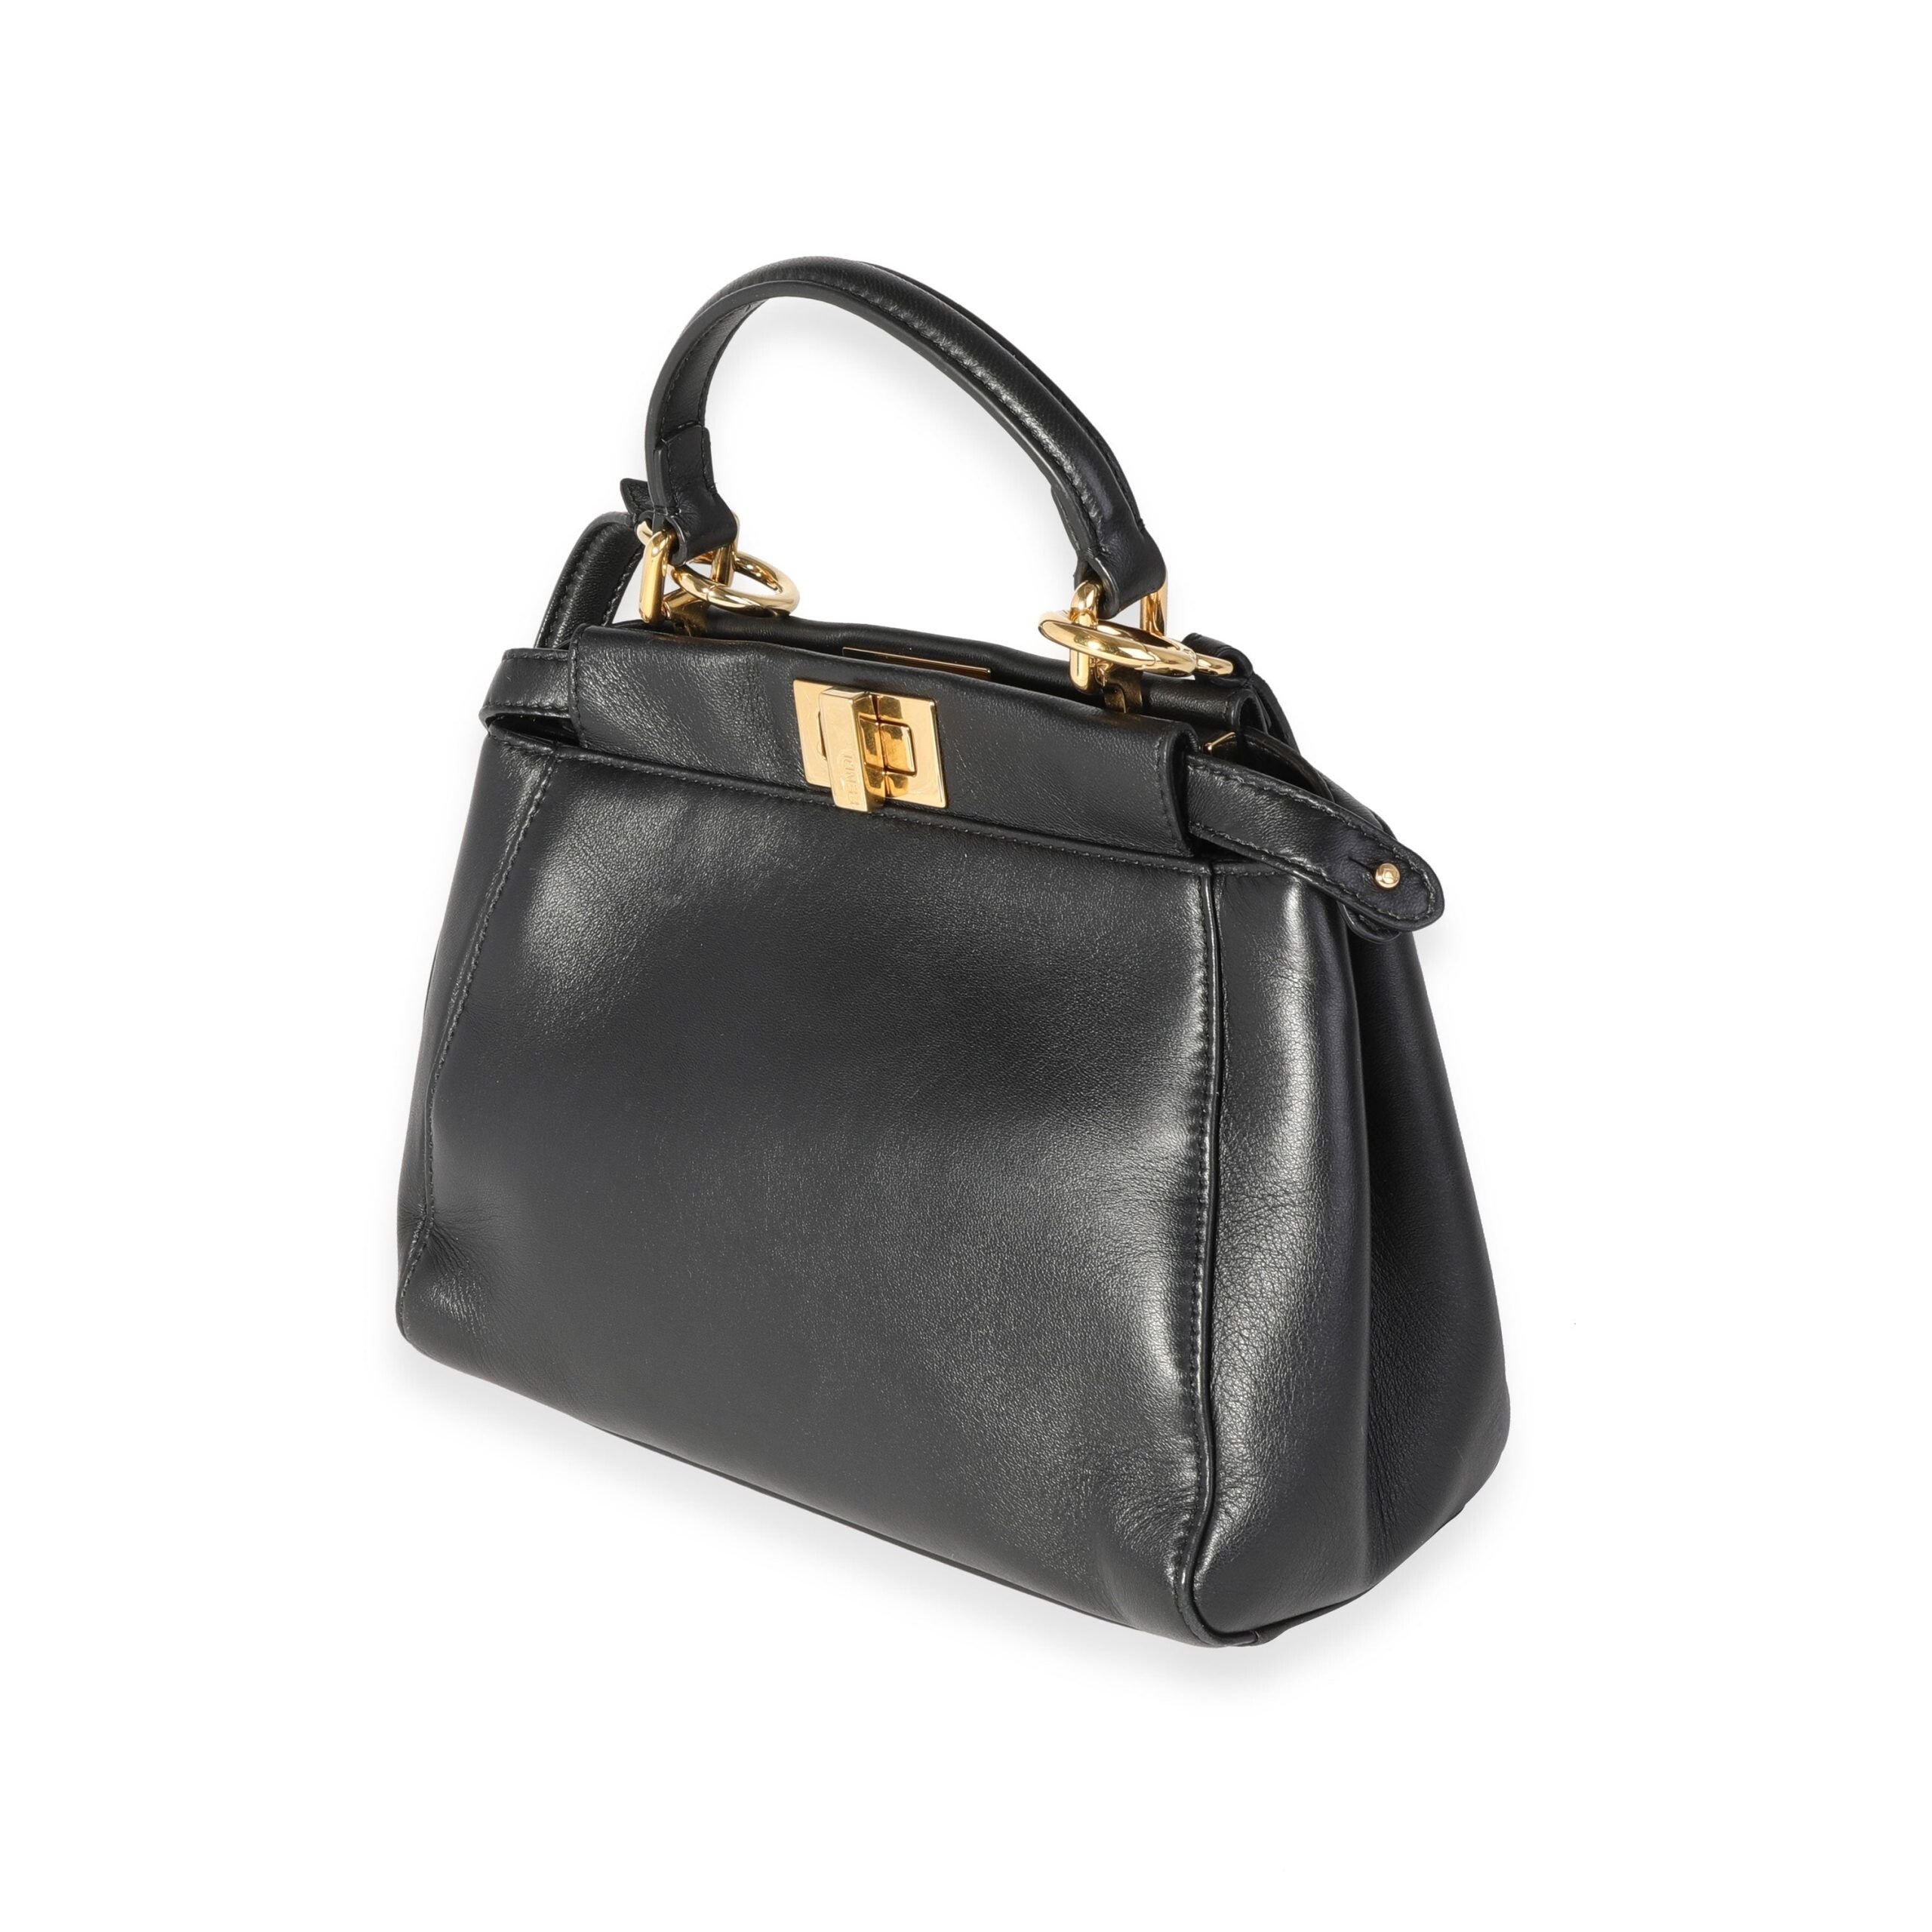 Fendi Fendi Black Nappa Leather Iconic Mini Peekaboo Bag Size ONE SIZE - 2 Preview